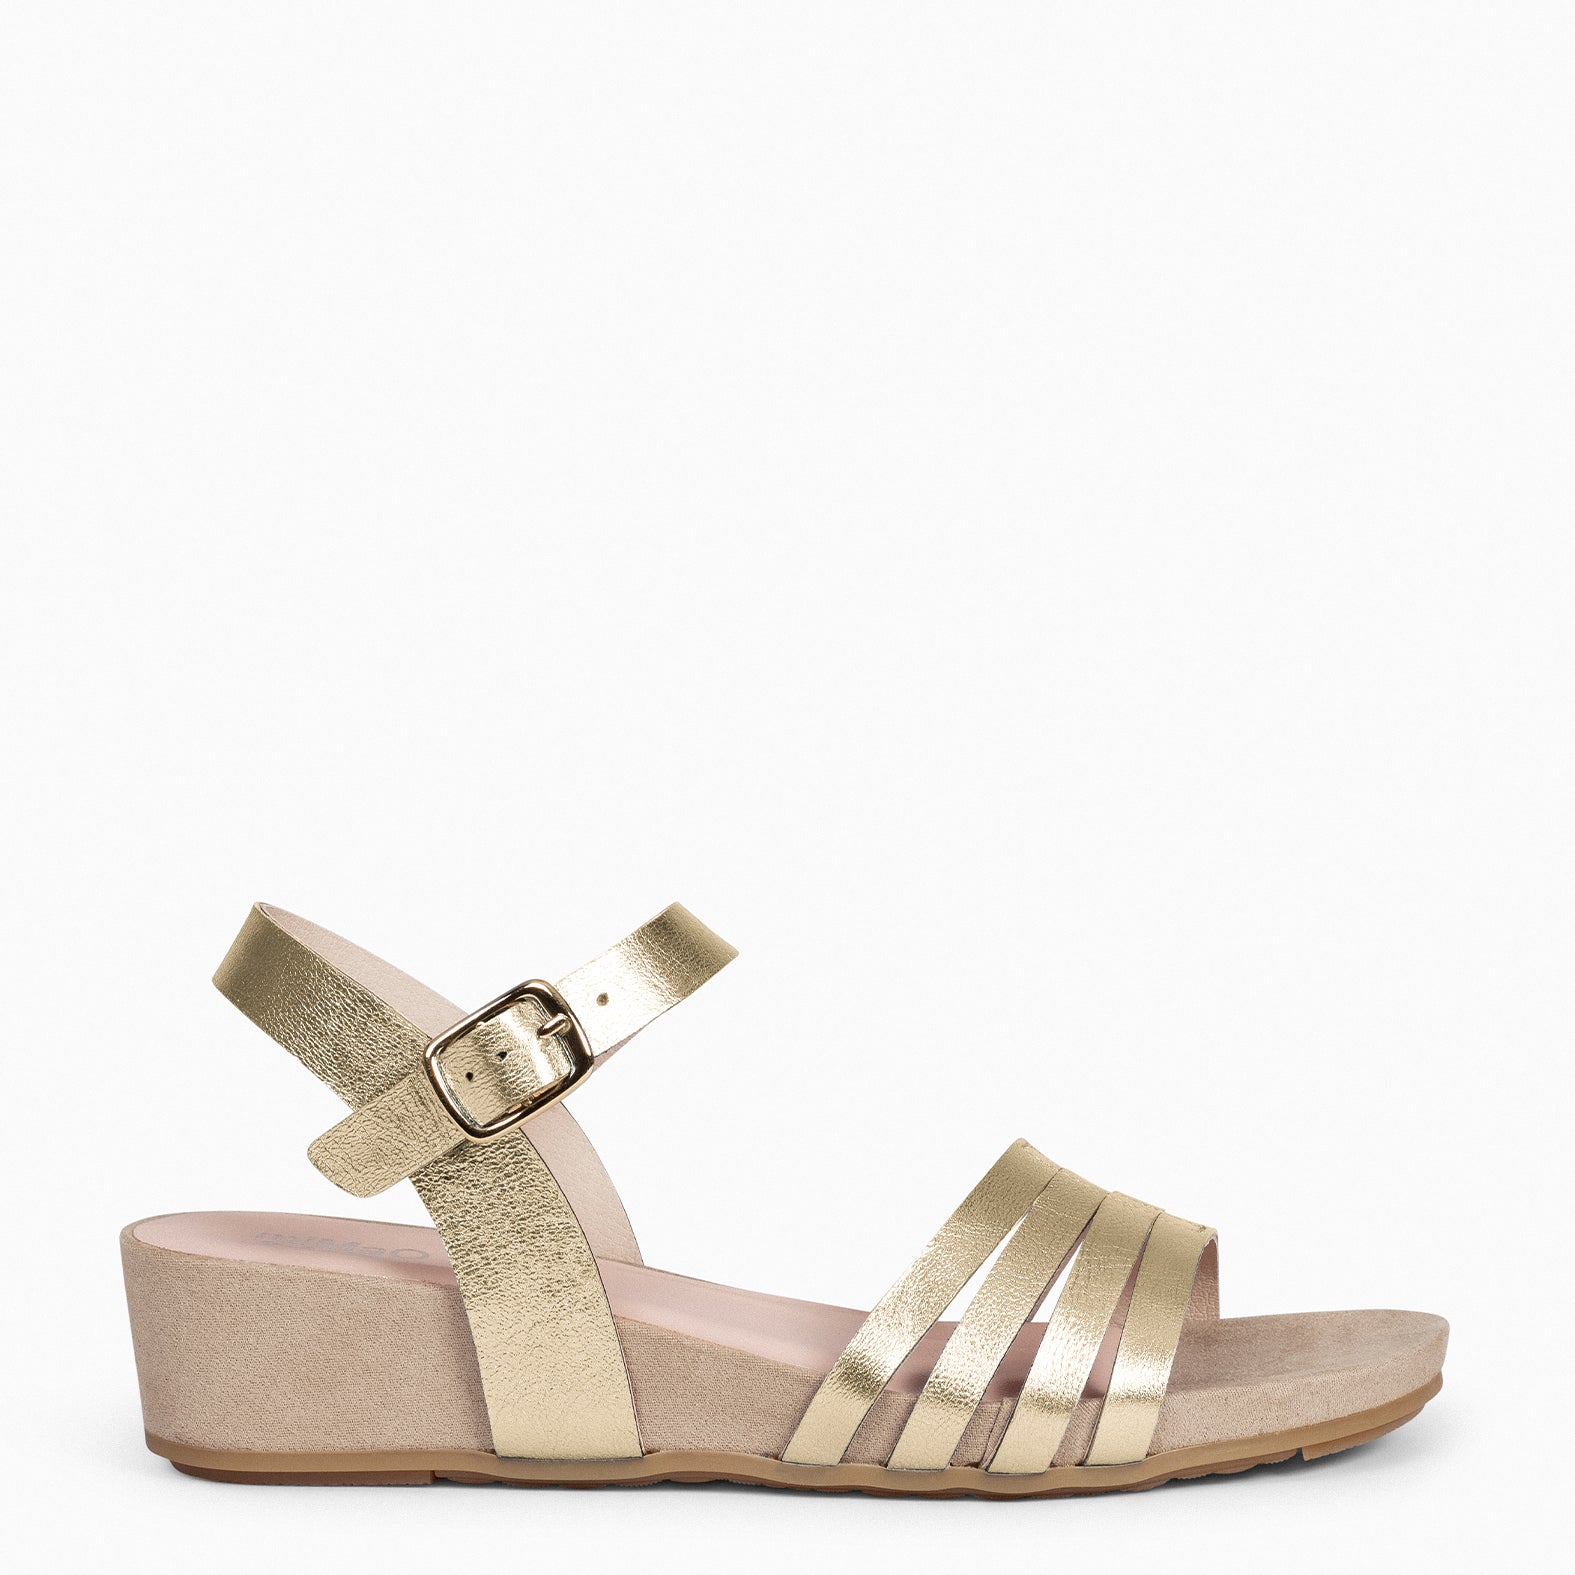 MESINA – GOLDEN Wedge sandal with metallic straps 